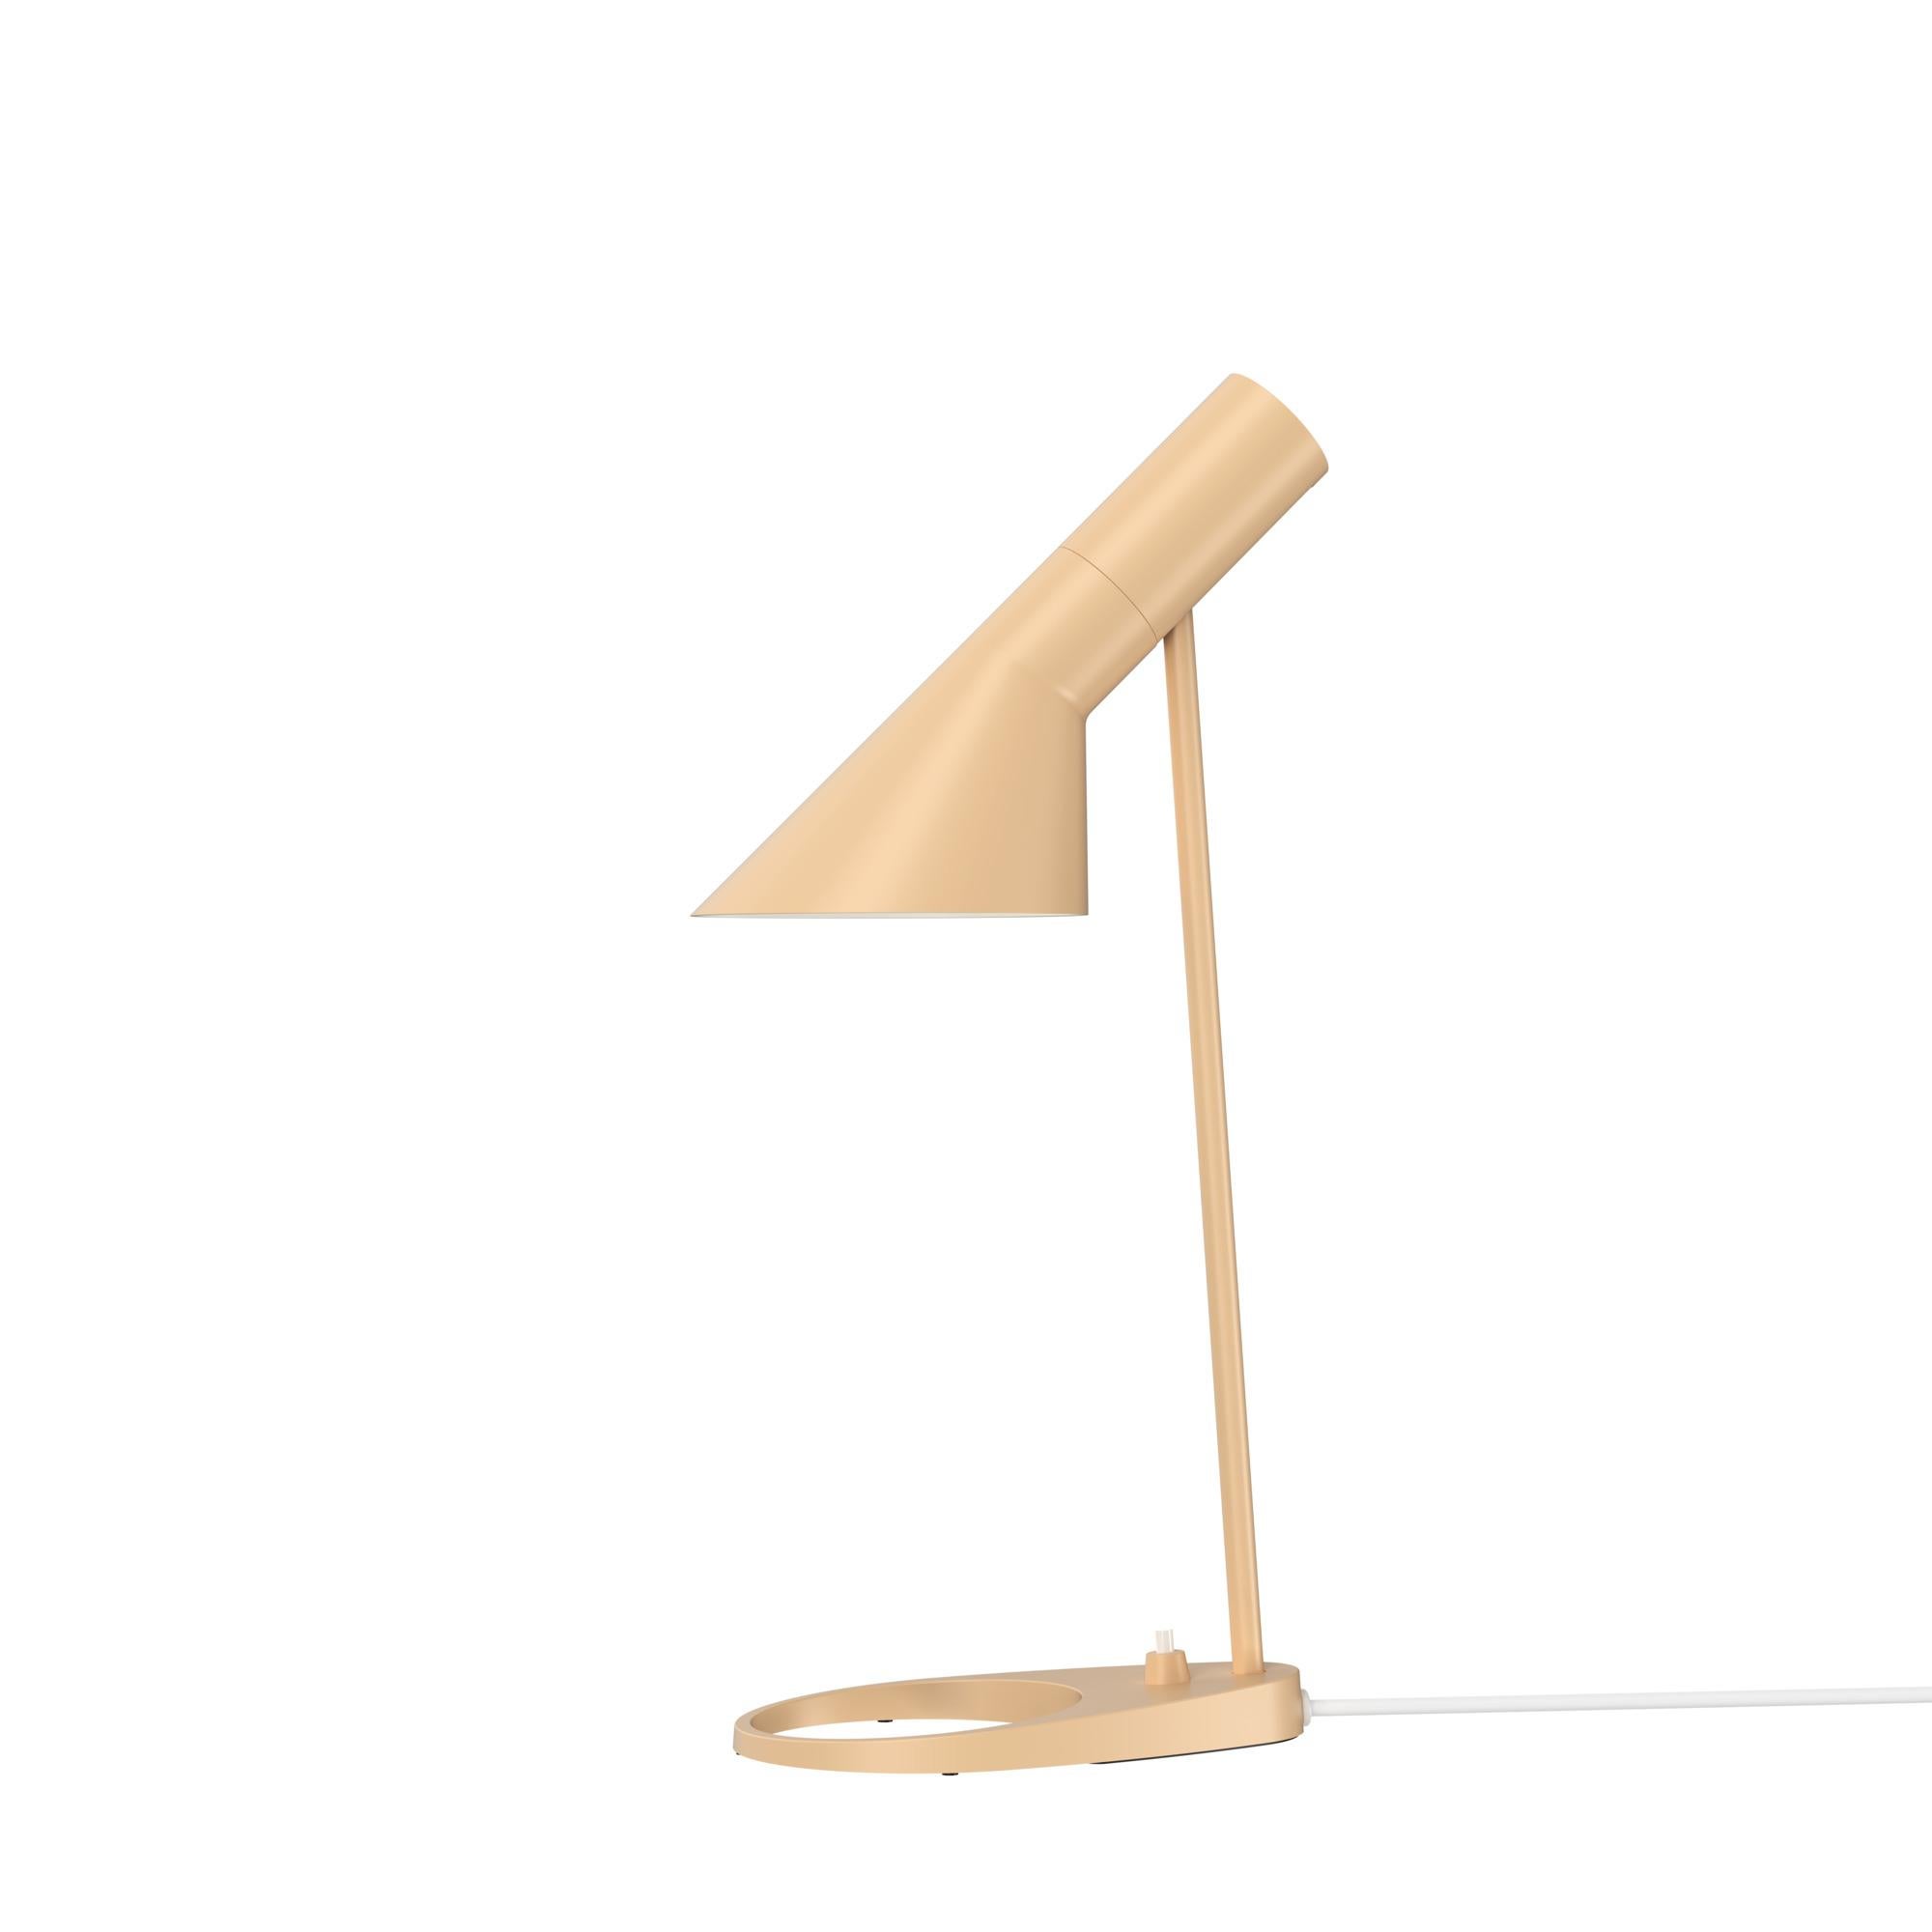 Arne Jacobsen 'Aj Mini' Table Lamp in Warm Grey for Louis Poulsen For Sale 8